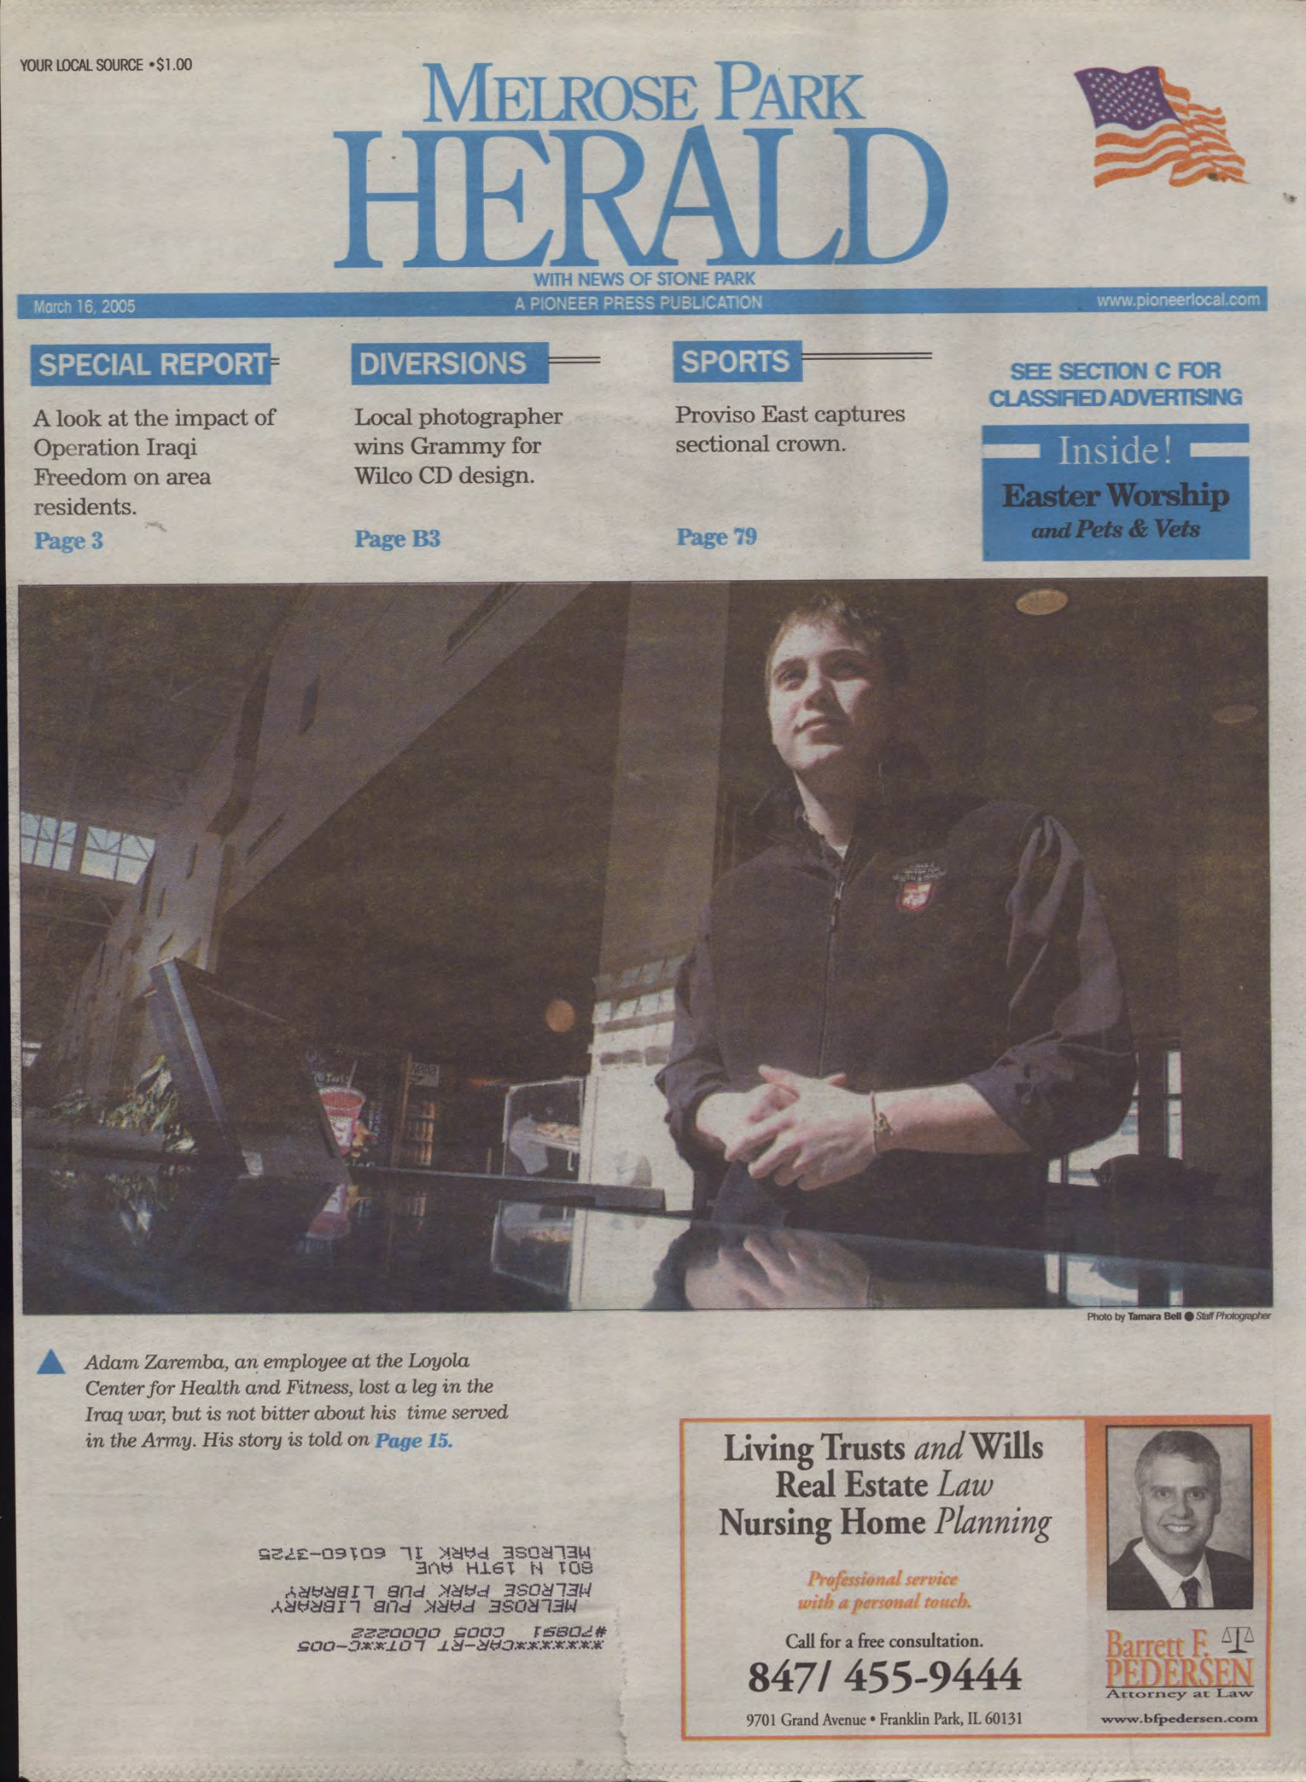 The Herald – 20050316